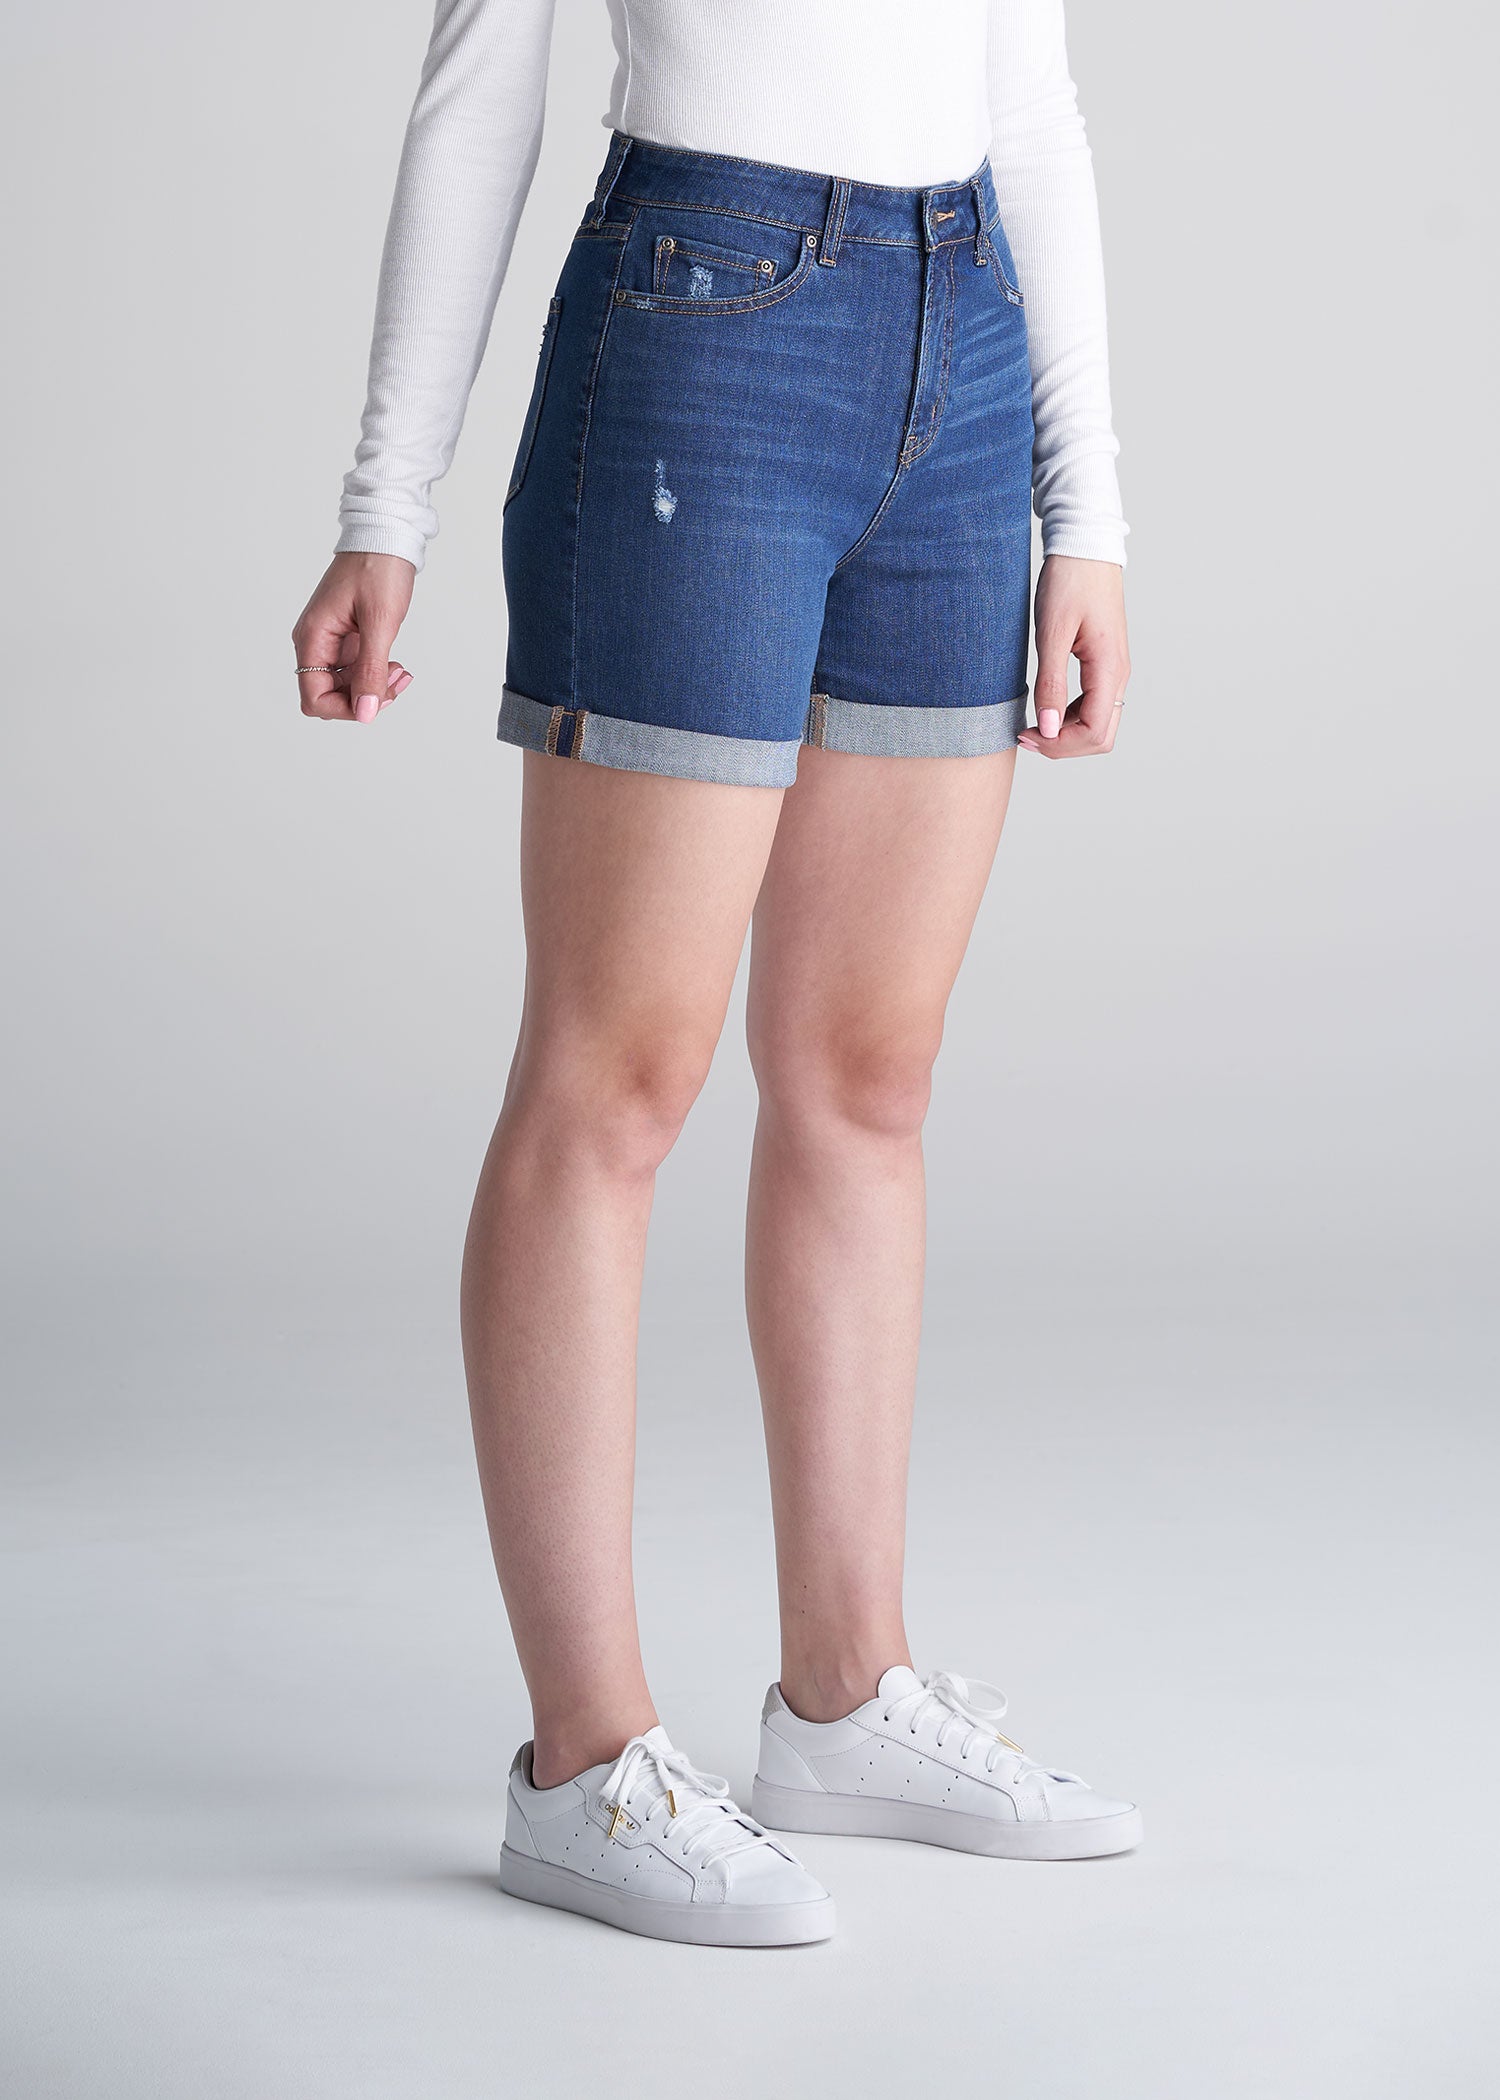 American_Tall_Womens_denim_shorts_medium_blue-front